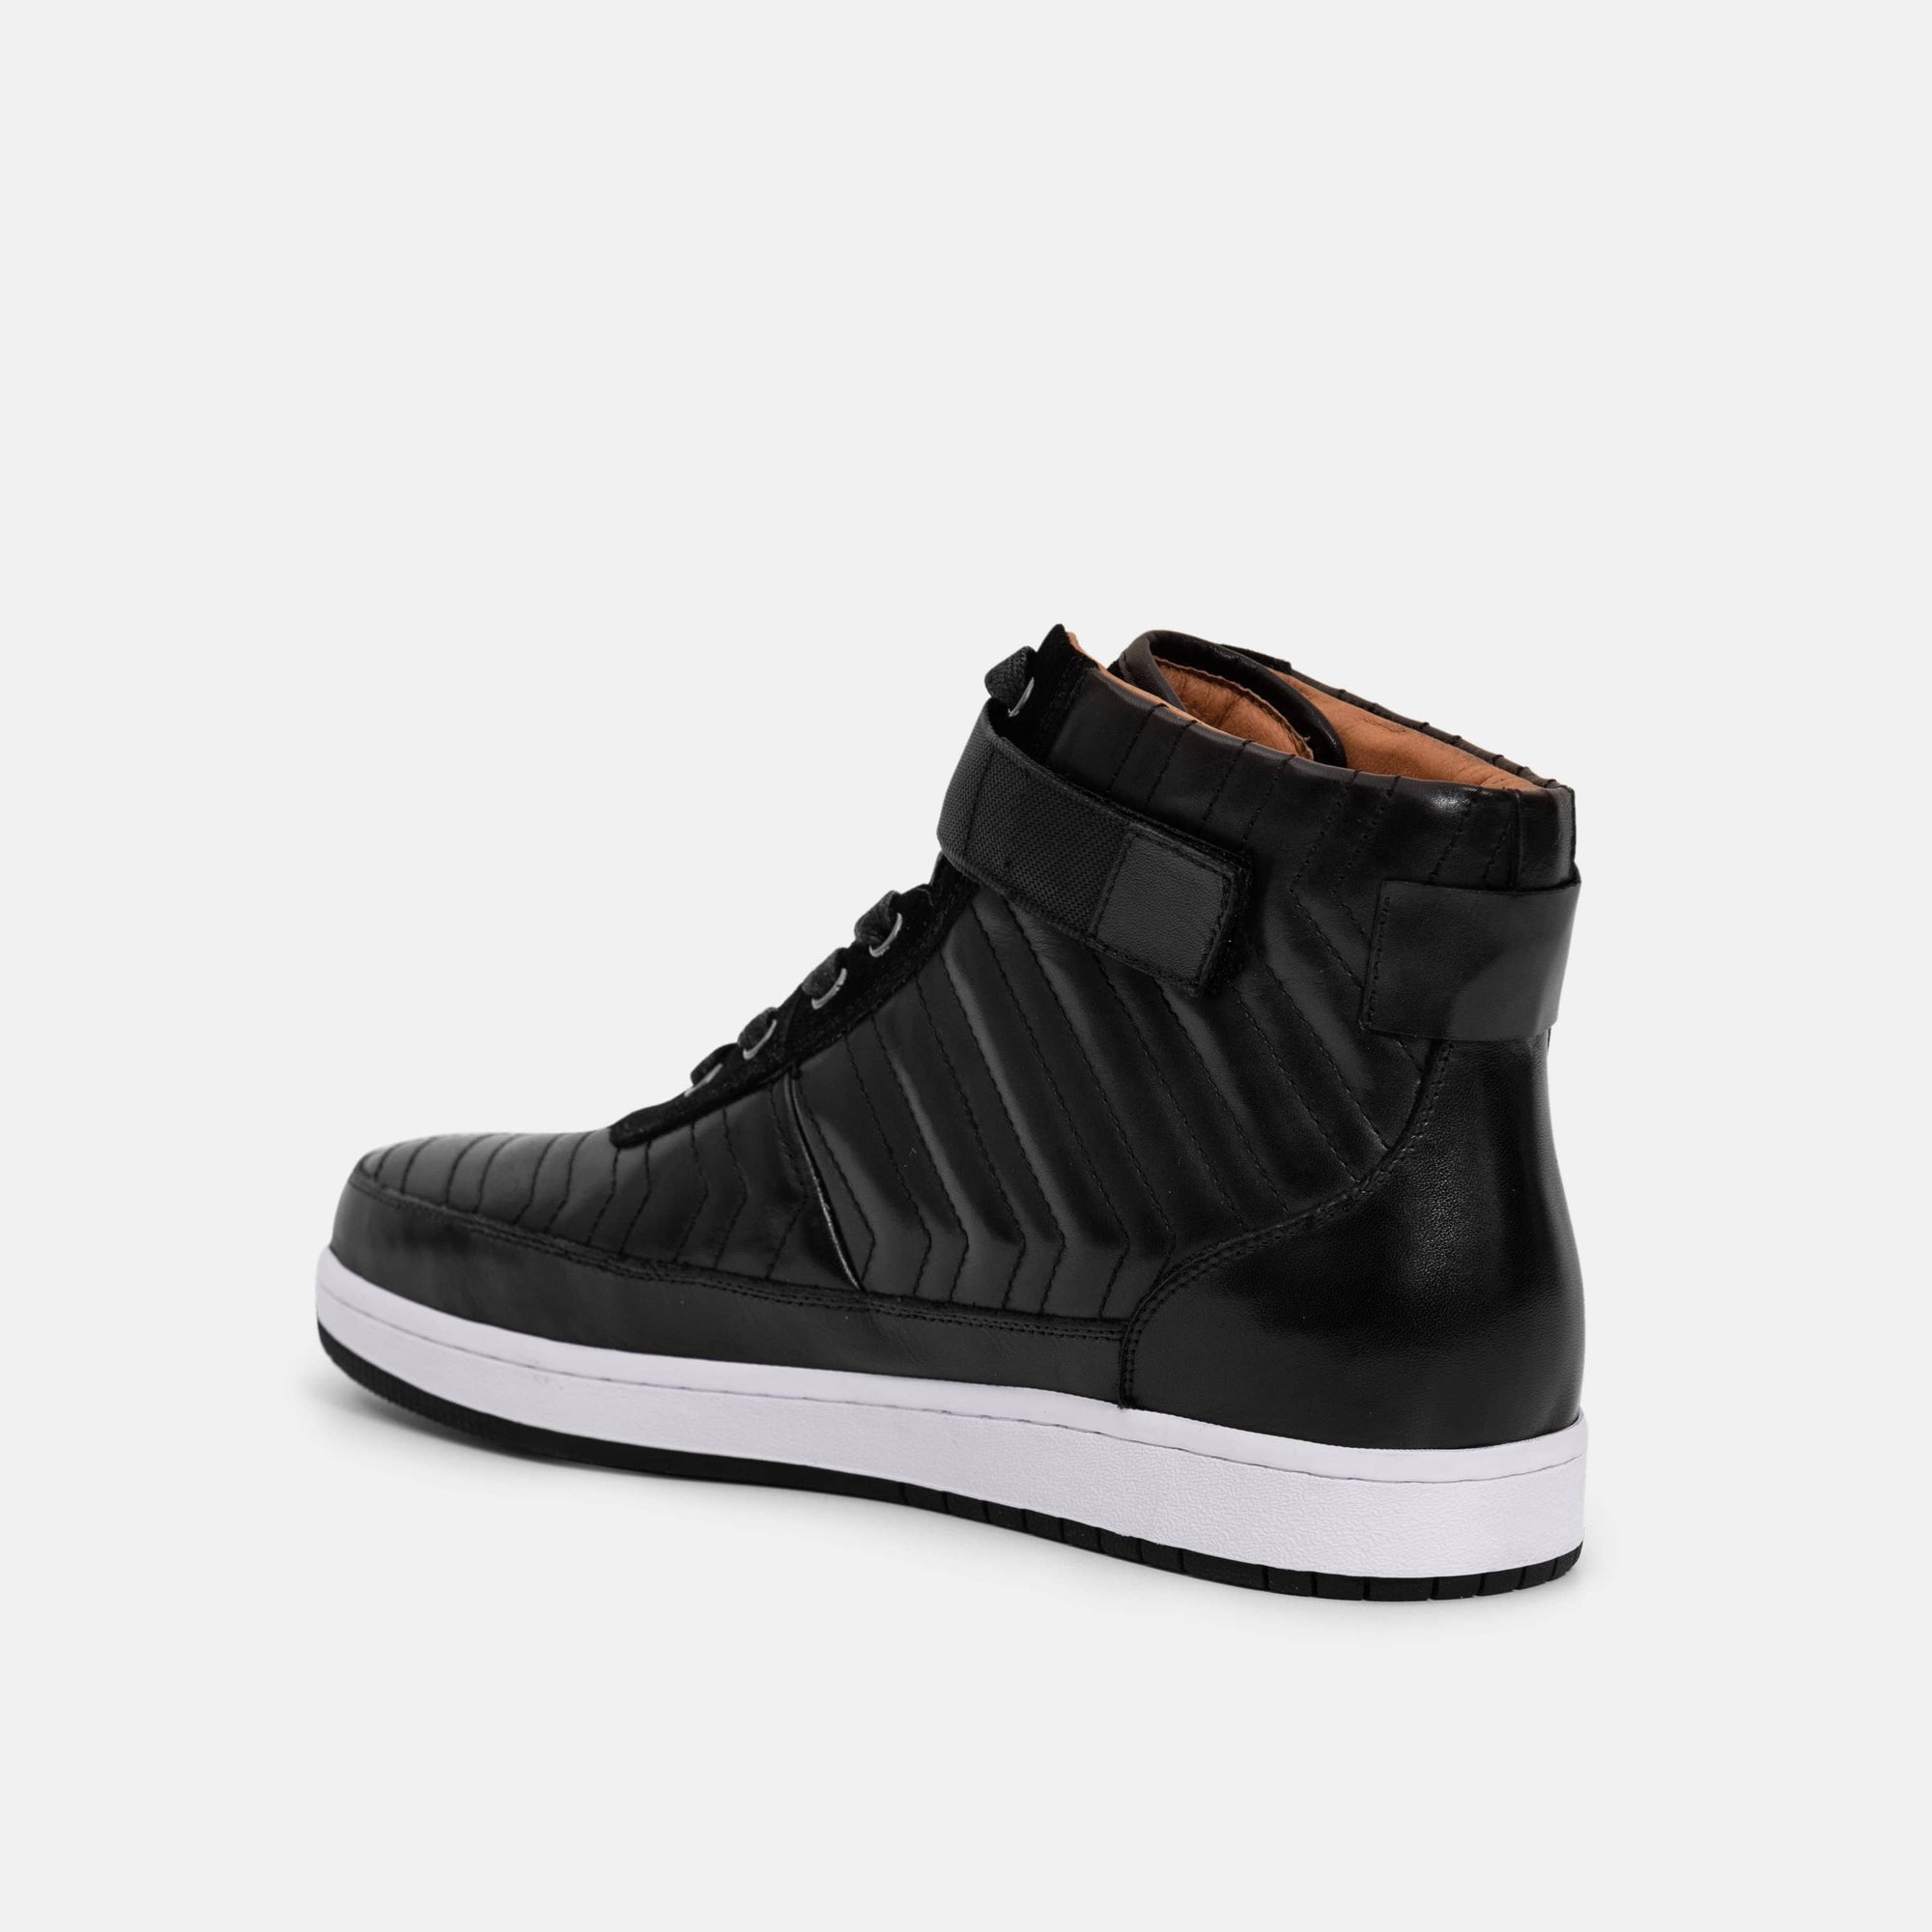 Yesler Black Leather High Top Sneakers   Marc Nolan